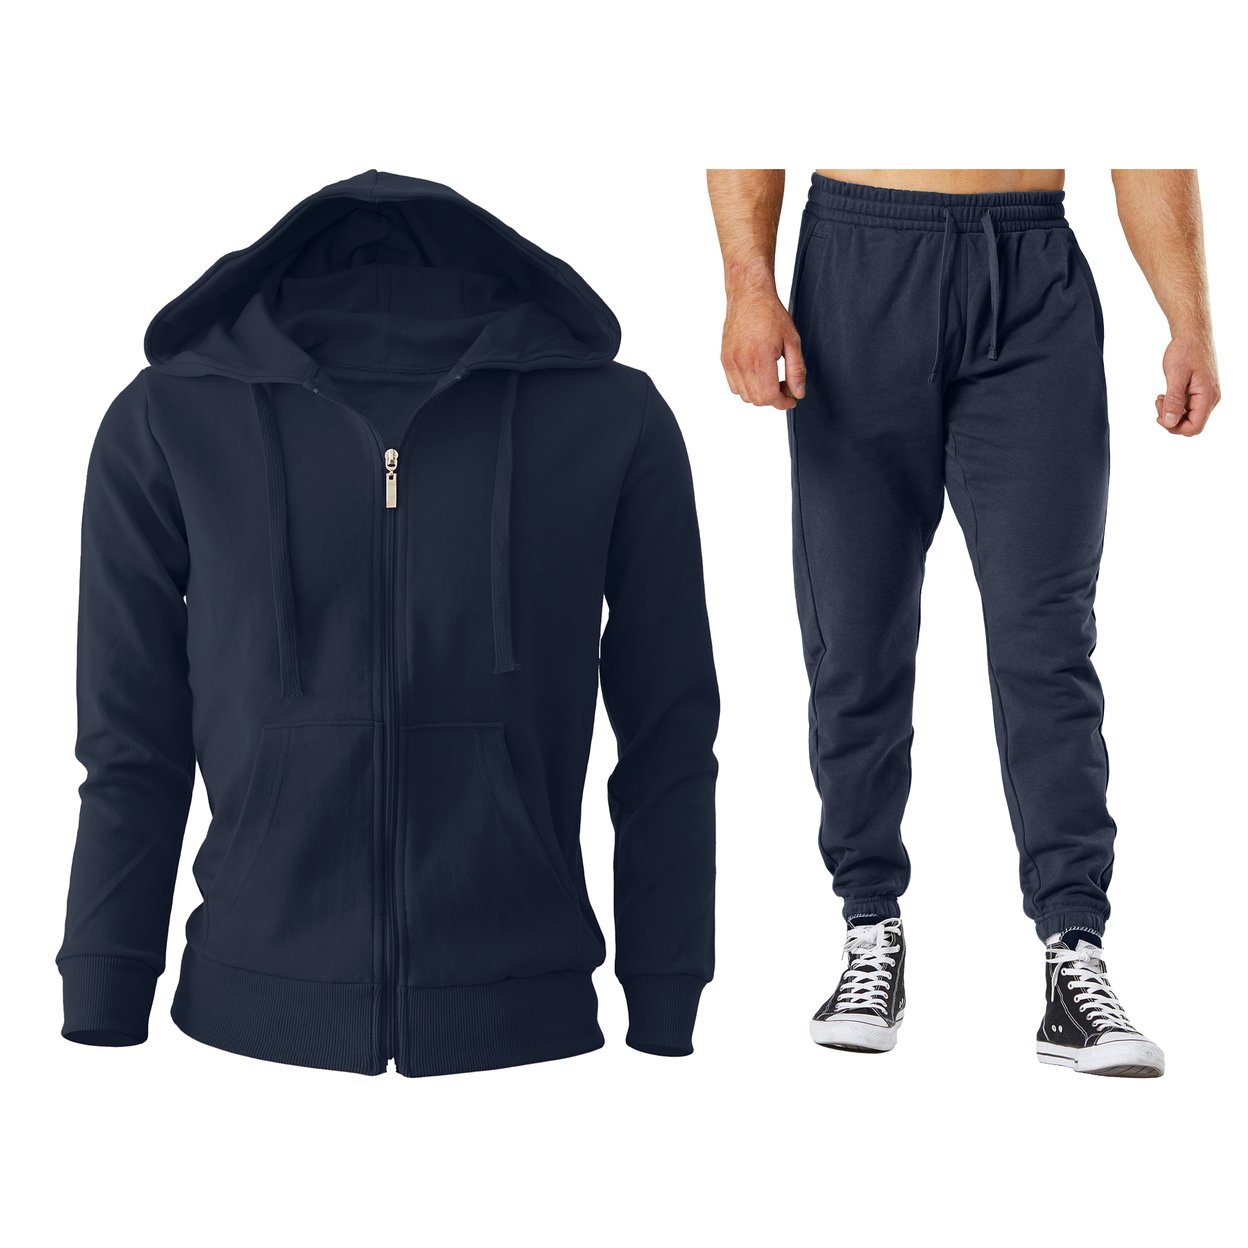 2/4-Piece: Men's Winter Warm Cozy Athletic Multi-Pockets BIG & TALL Sweatsuit Set - Black, 2, Small